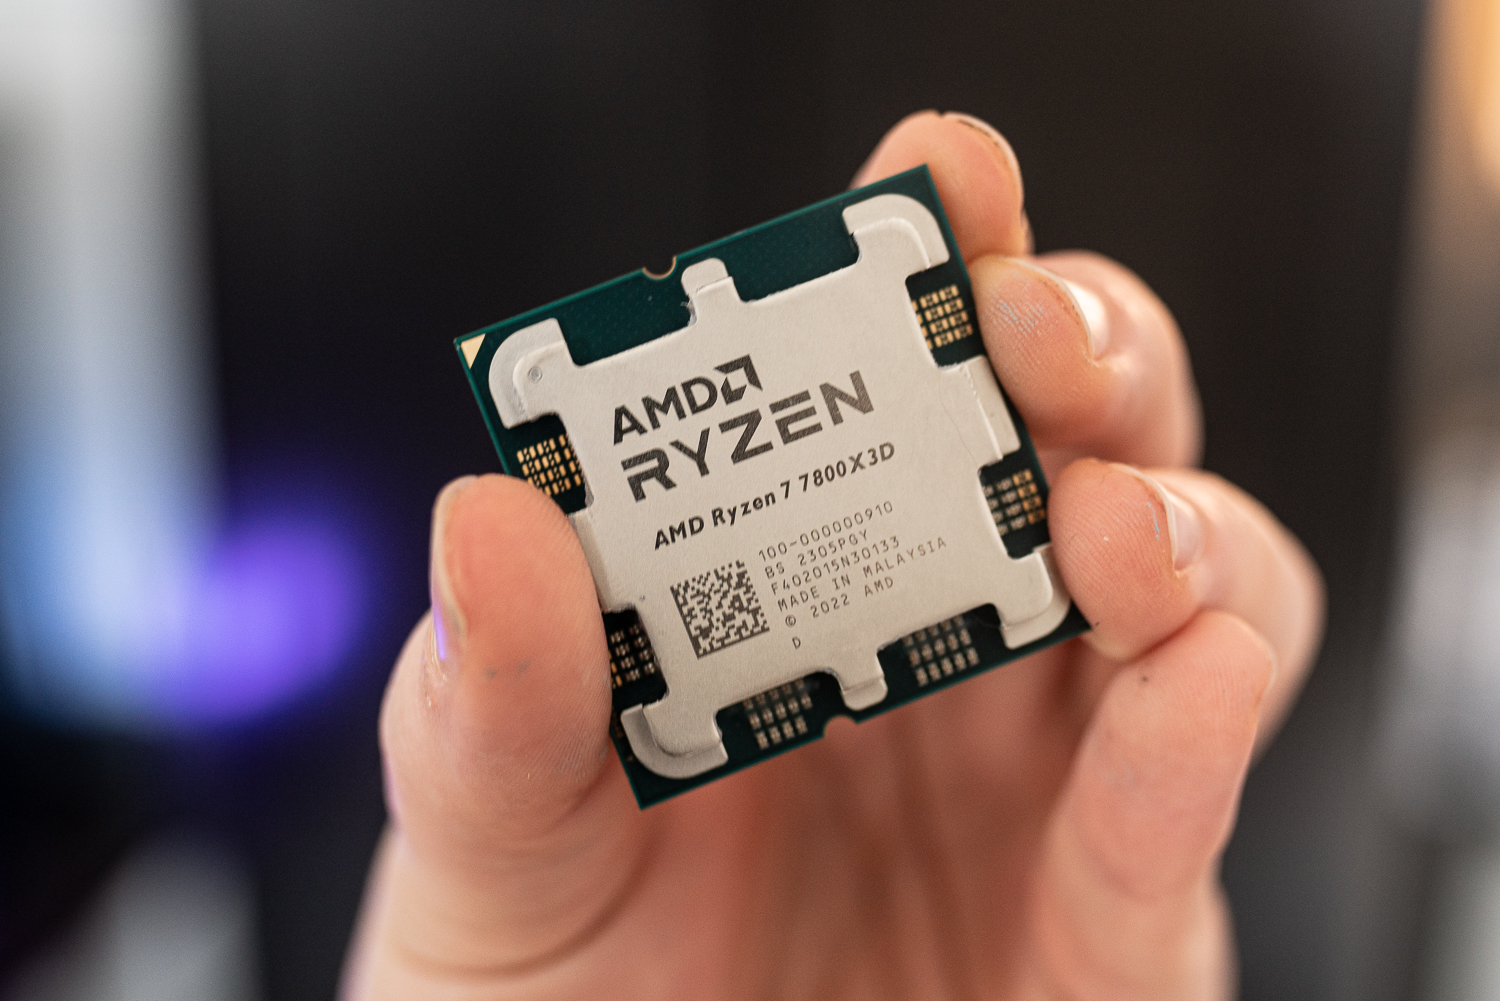 AMD RYZEN 7800X3D-